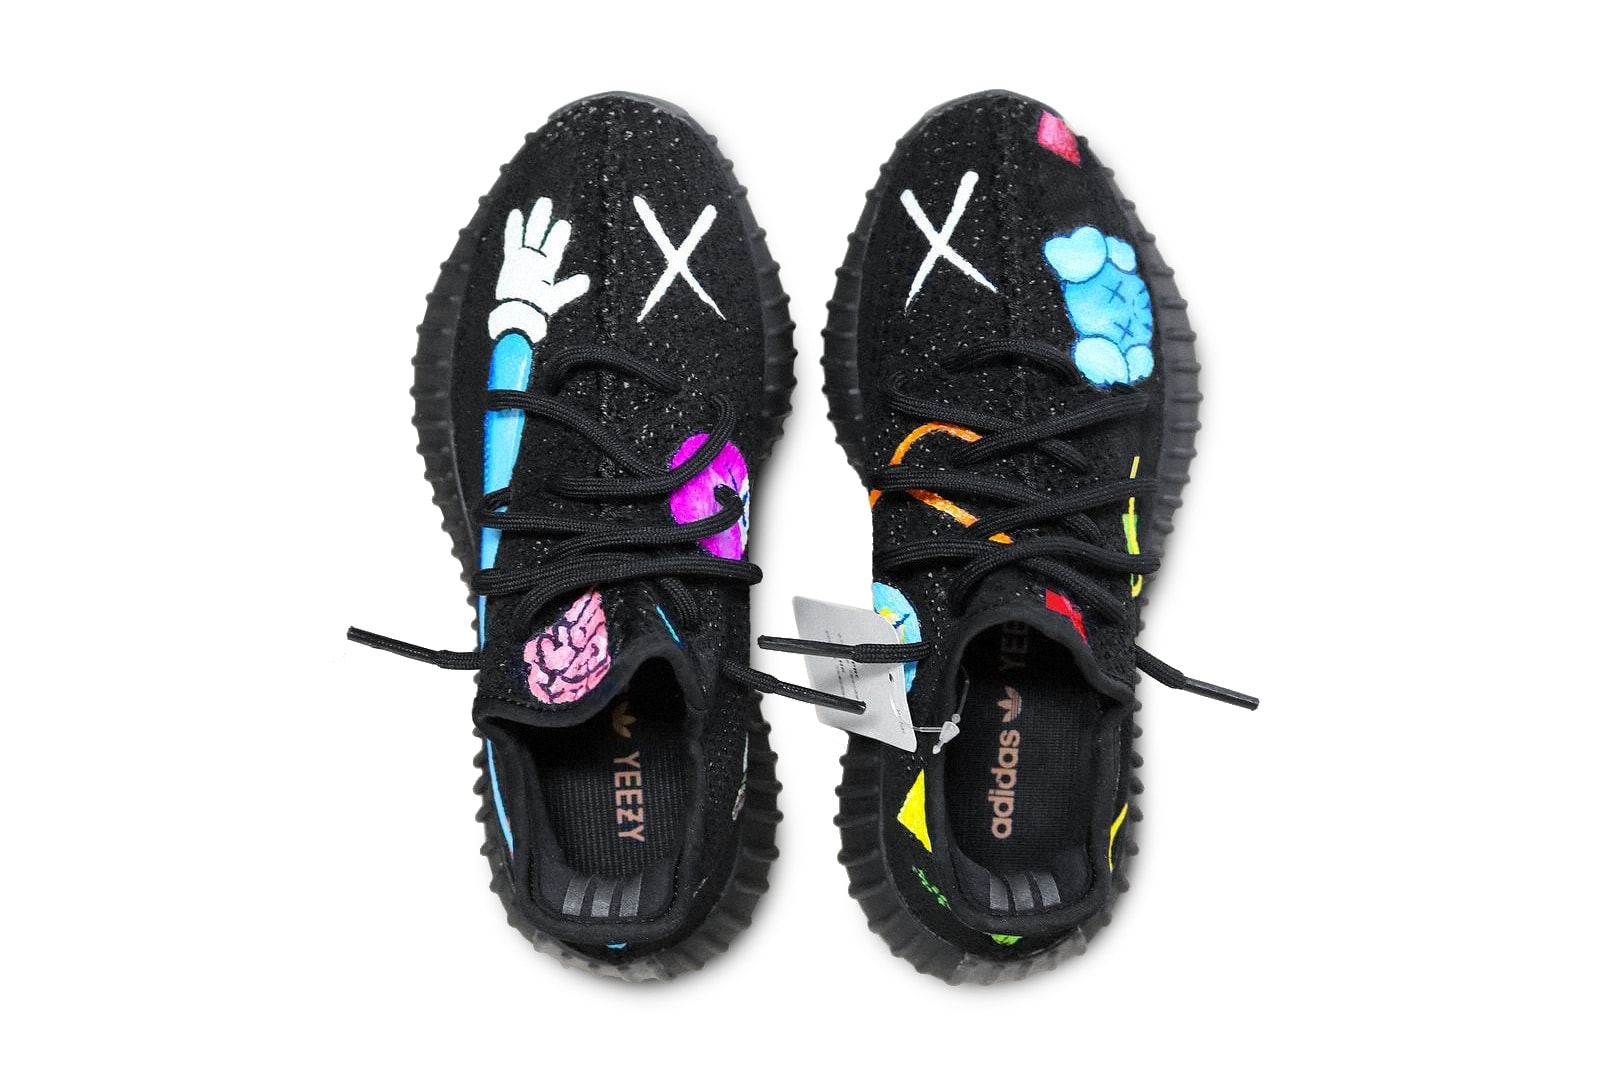 Make your favorite Air Jordan or Yeezy Sneakers into a Custom